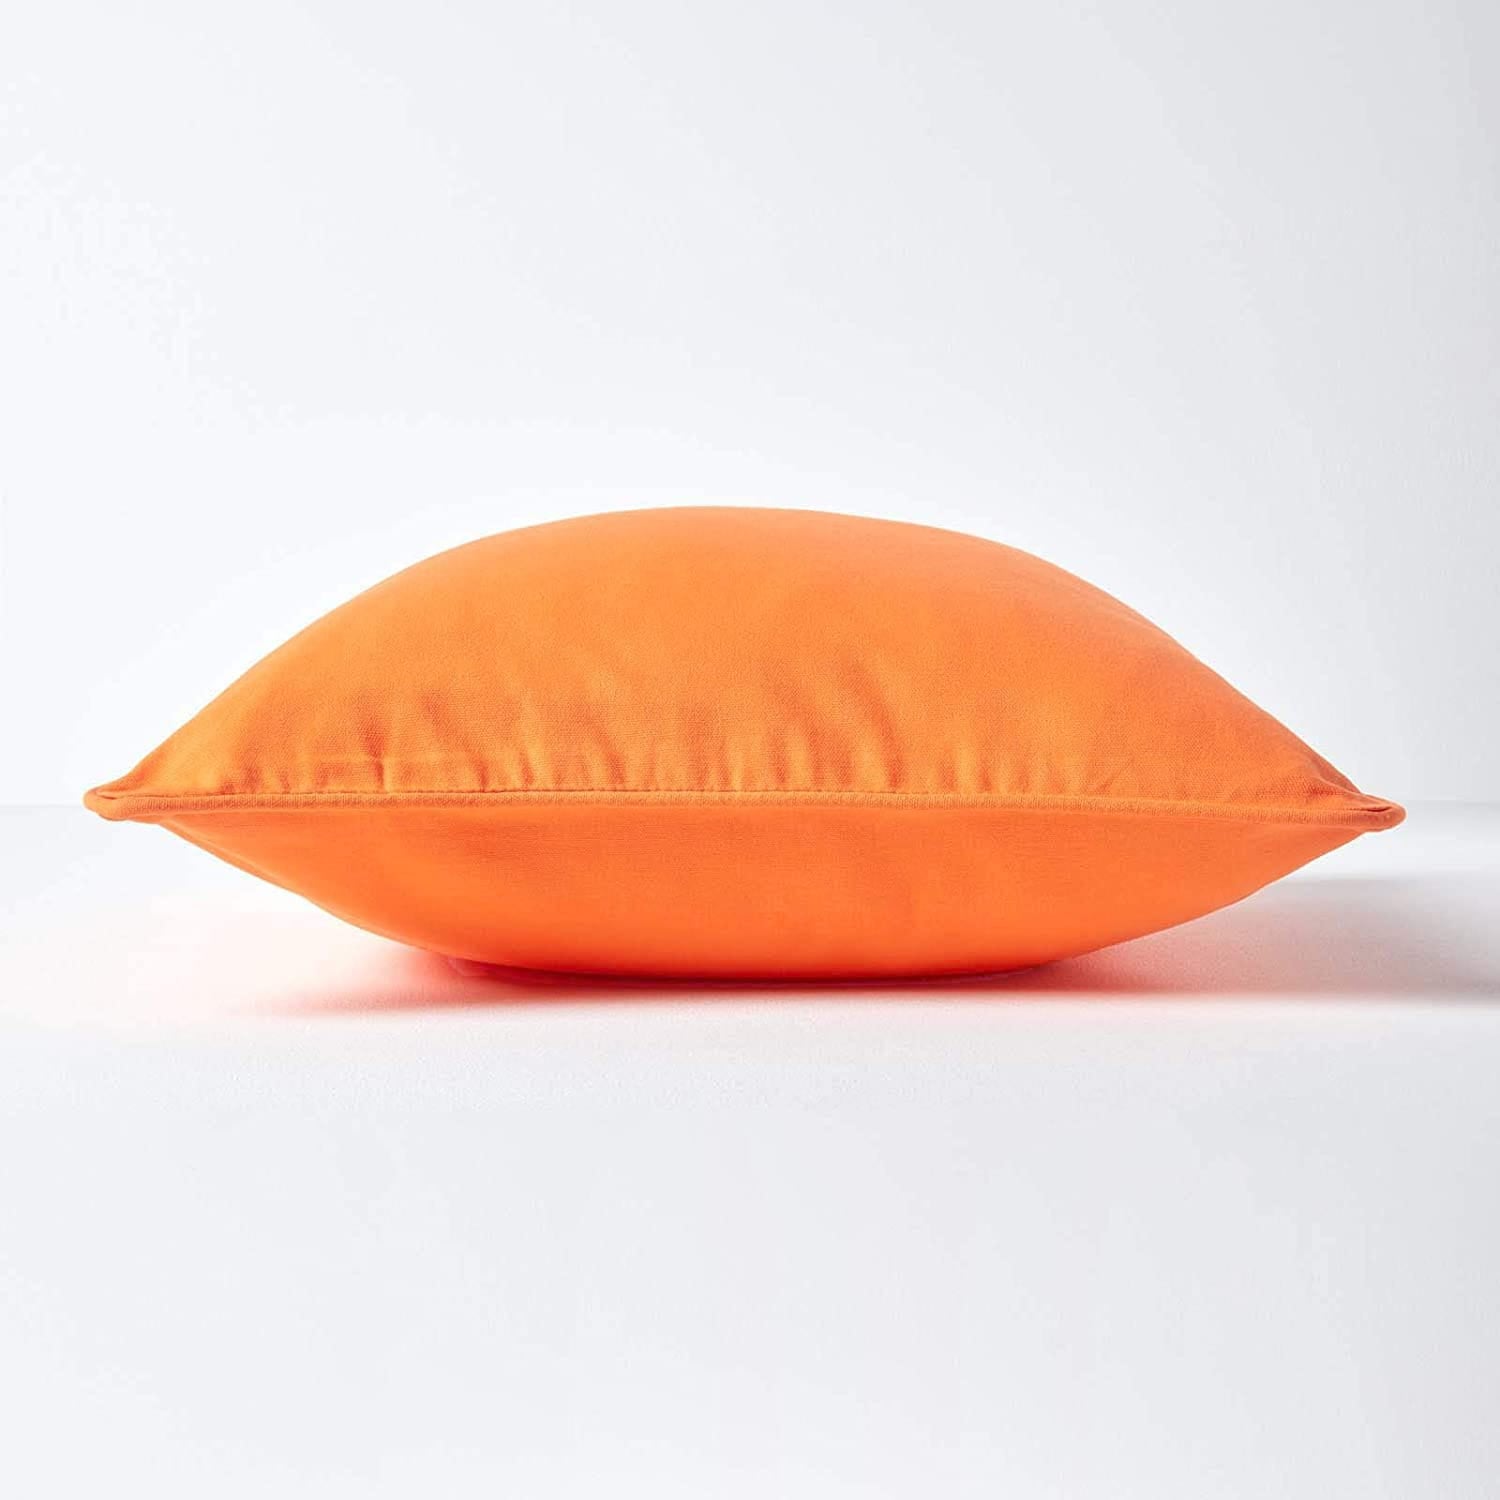 Plain Cotton Decorative Cushion Cover 1 Pc in Orange online at best prices